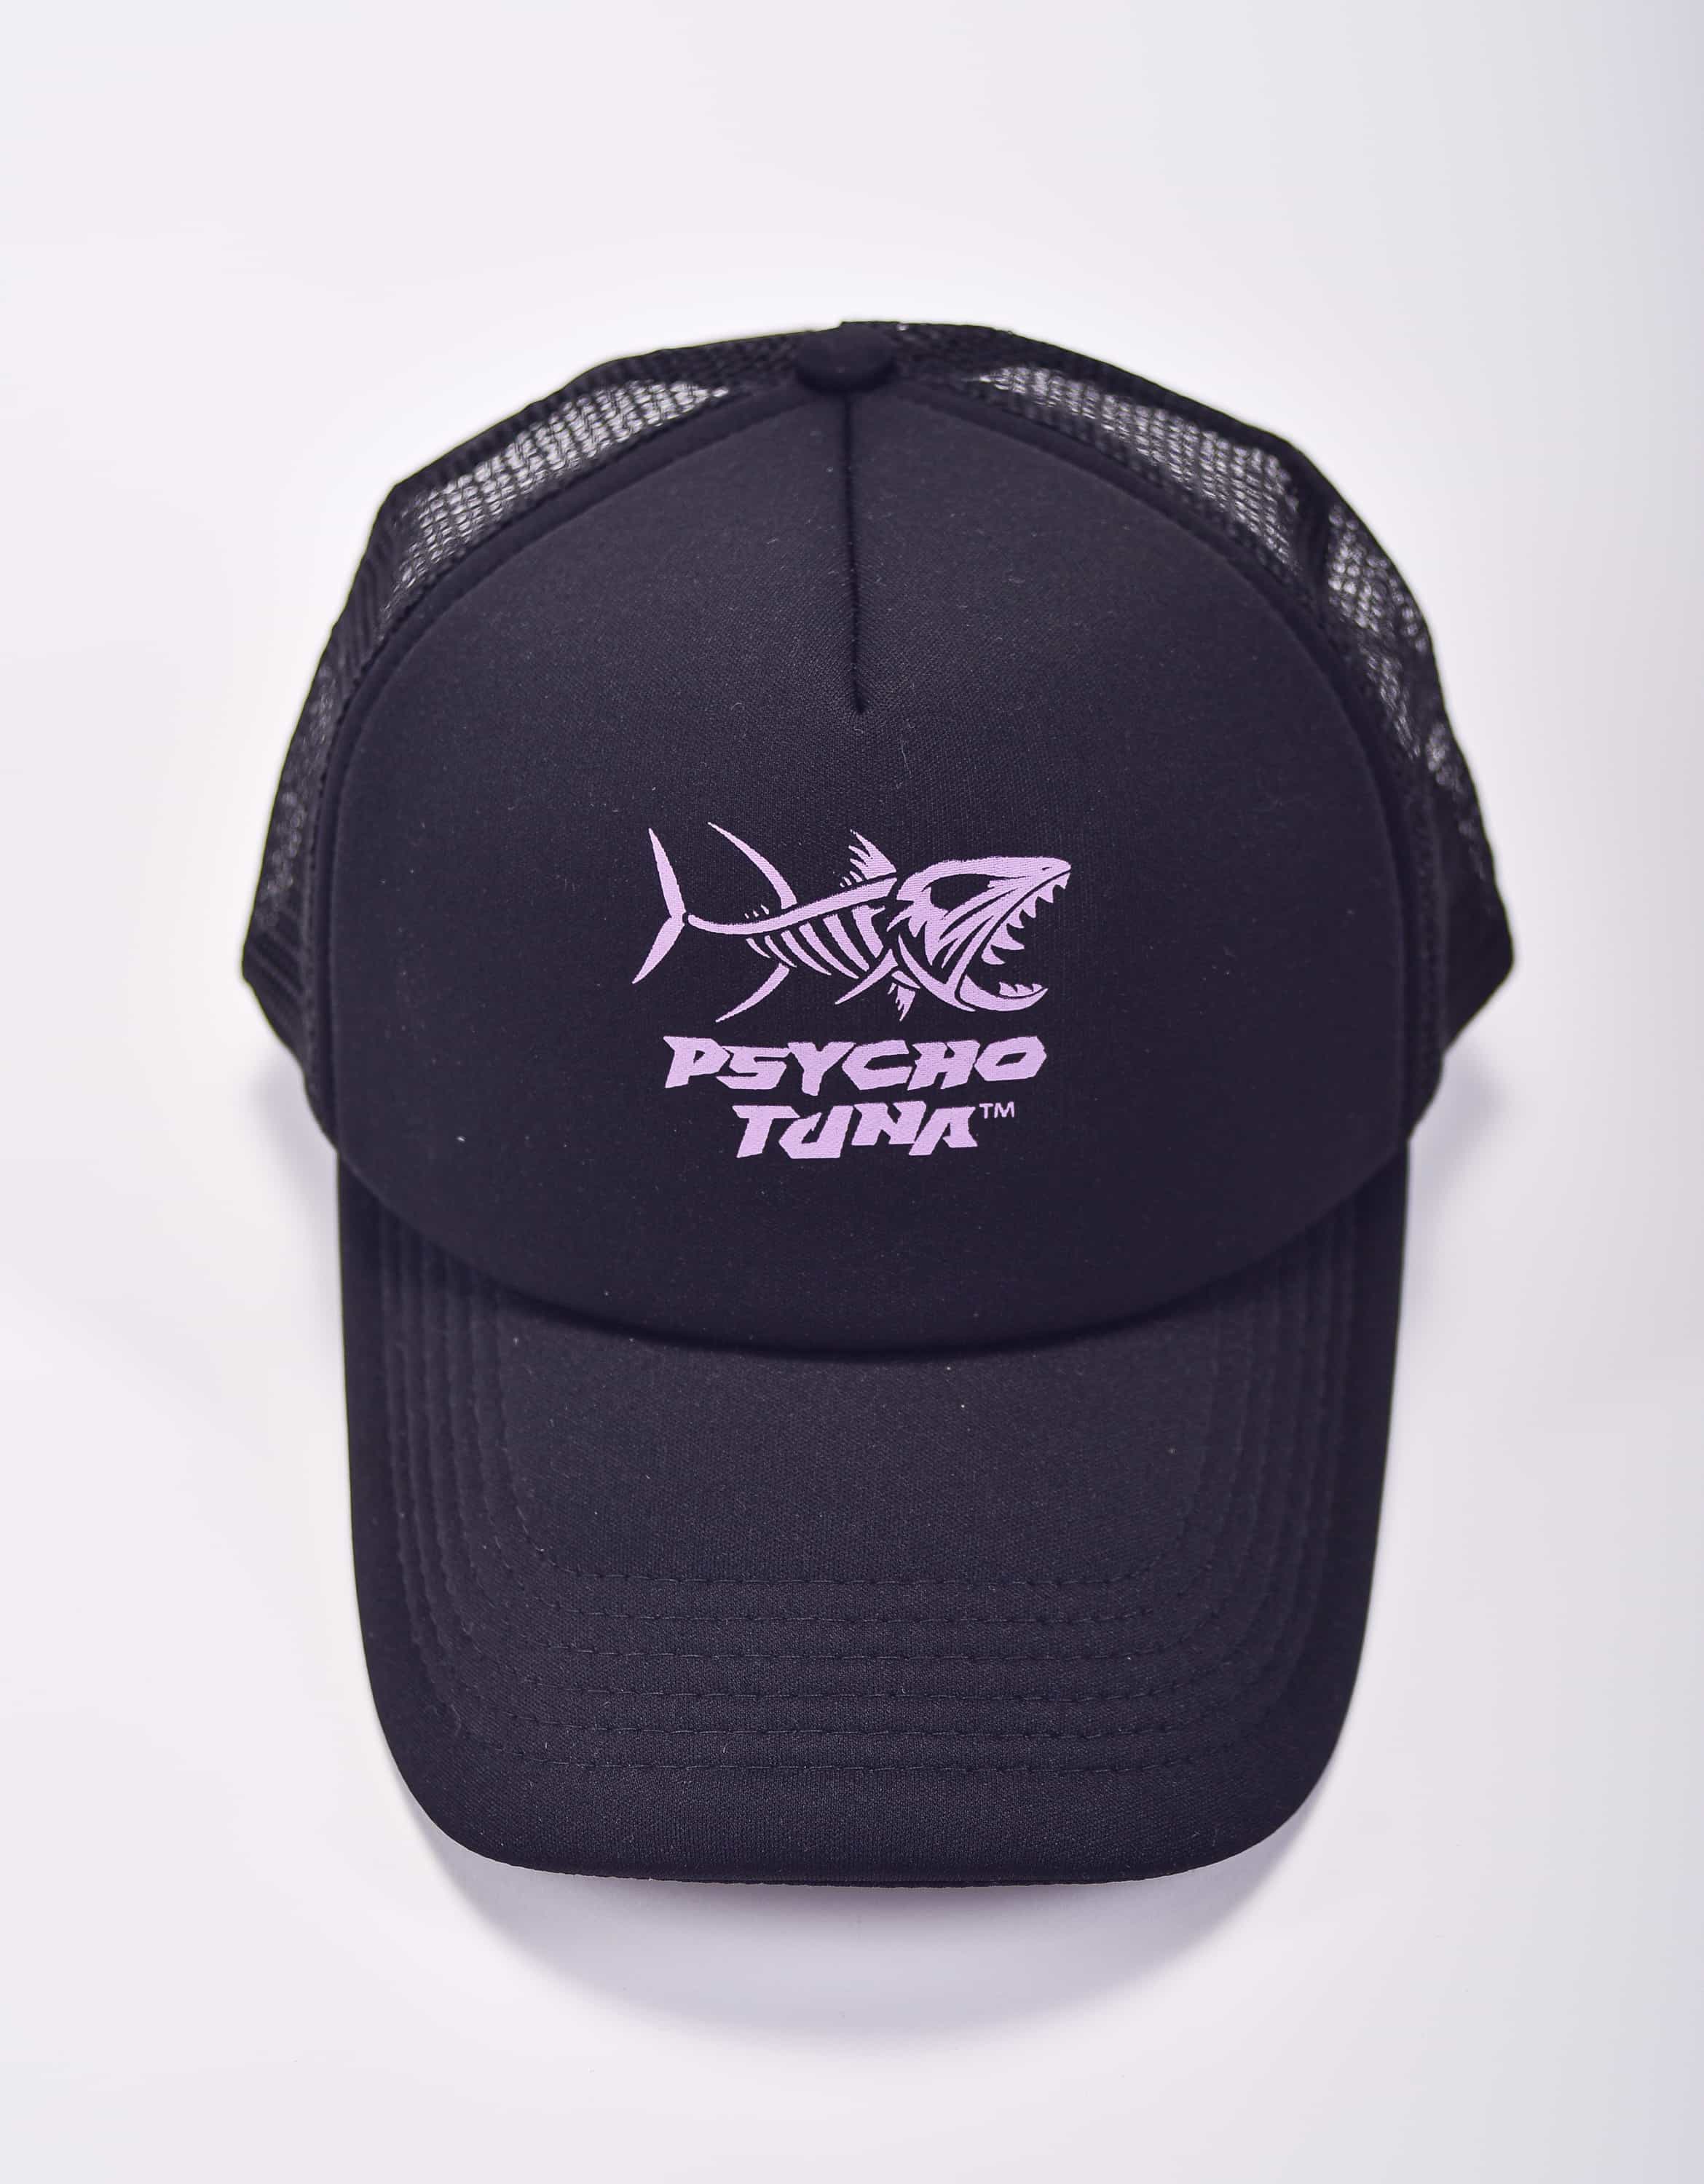 Men's Psycho Tuna Logo Hats